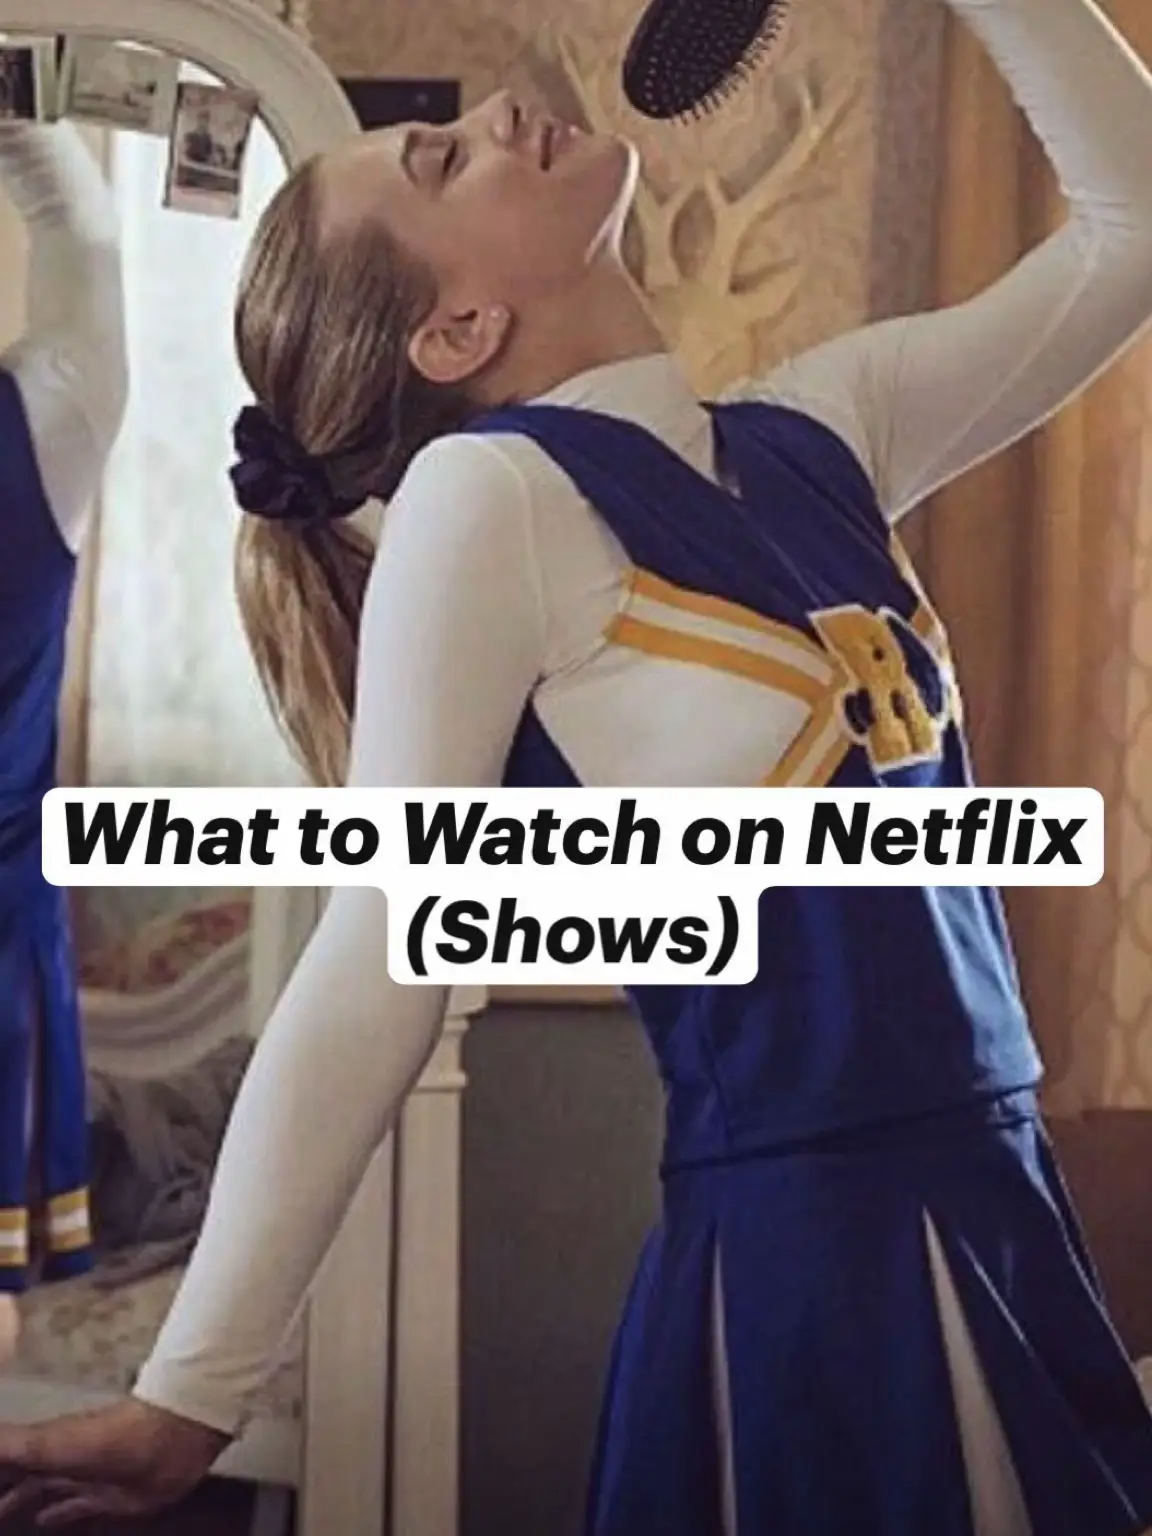 Top Gossip Girl Episodes on Netflix - Lemon8 Search